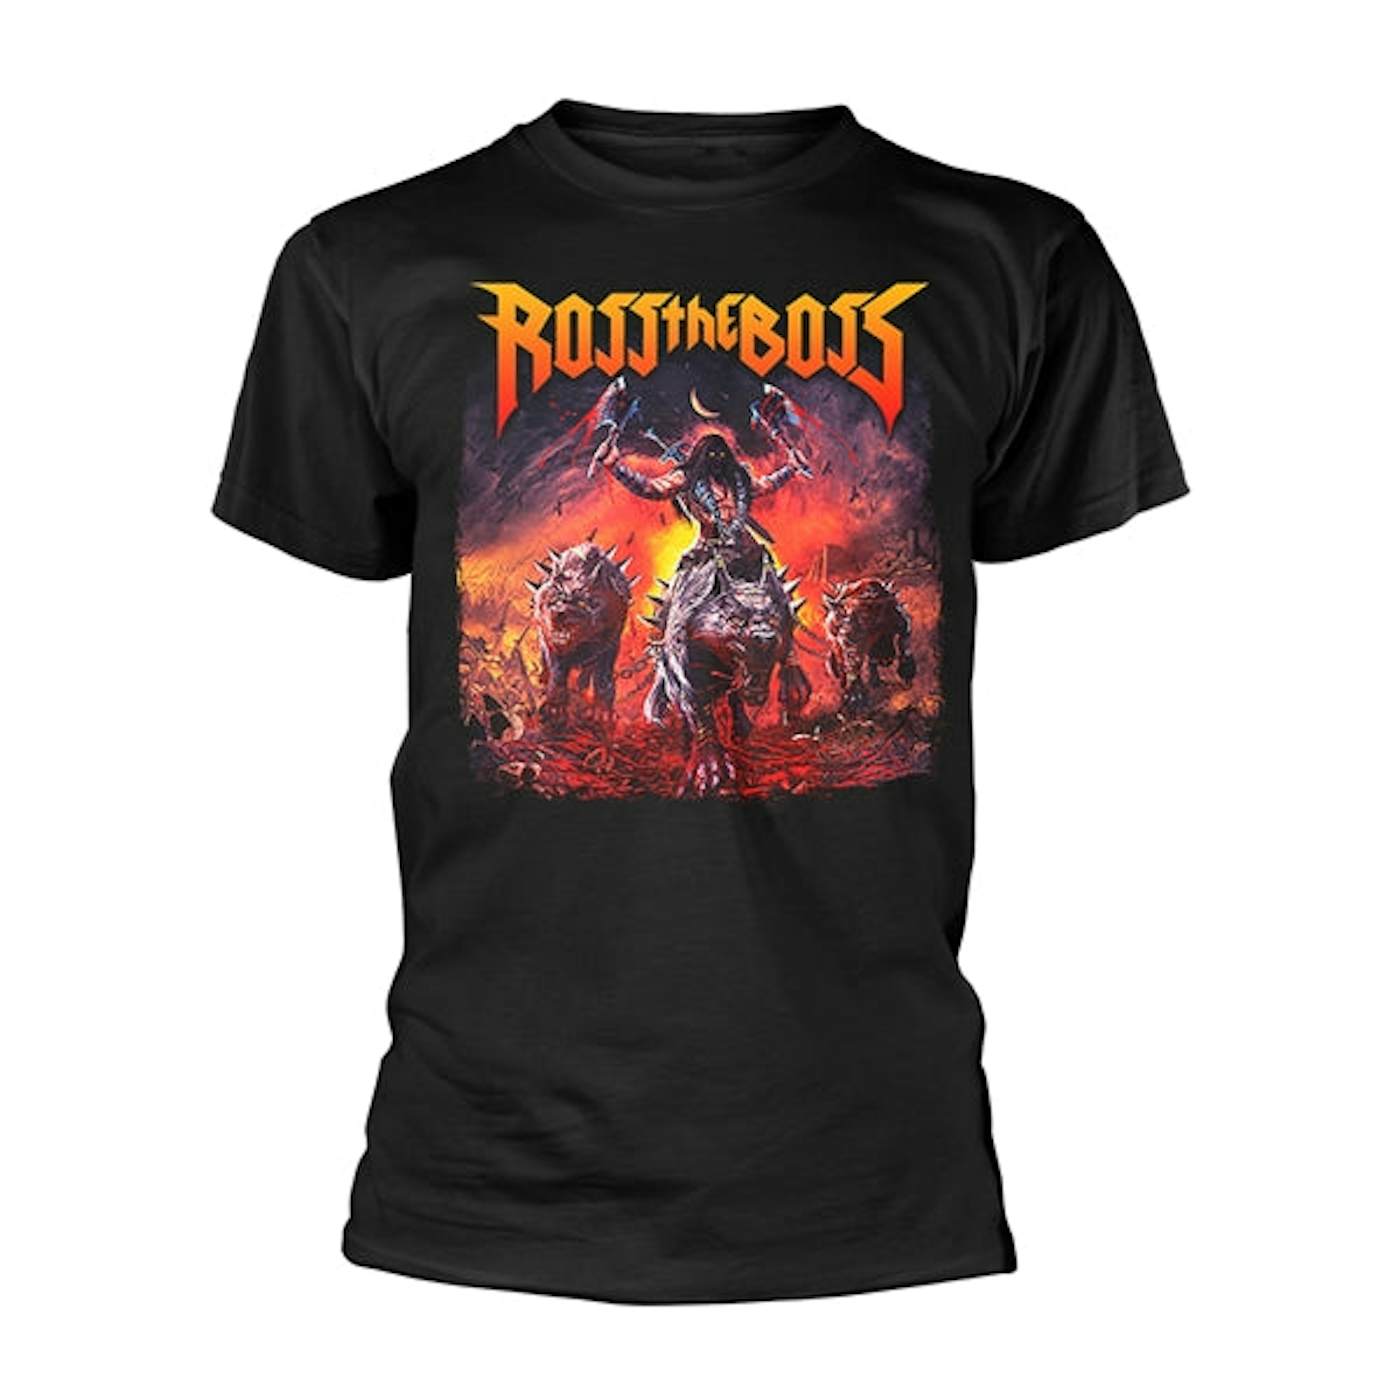 Ross The Boss T Shirt - Wolves